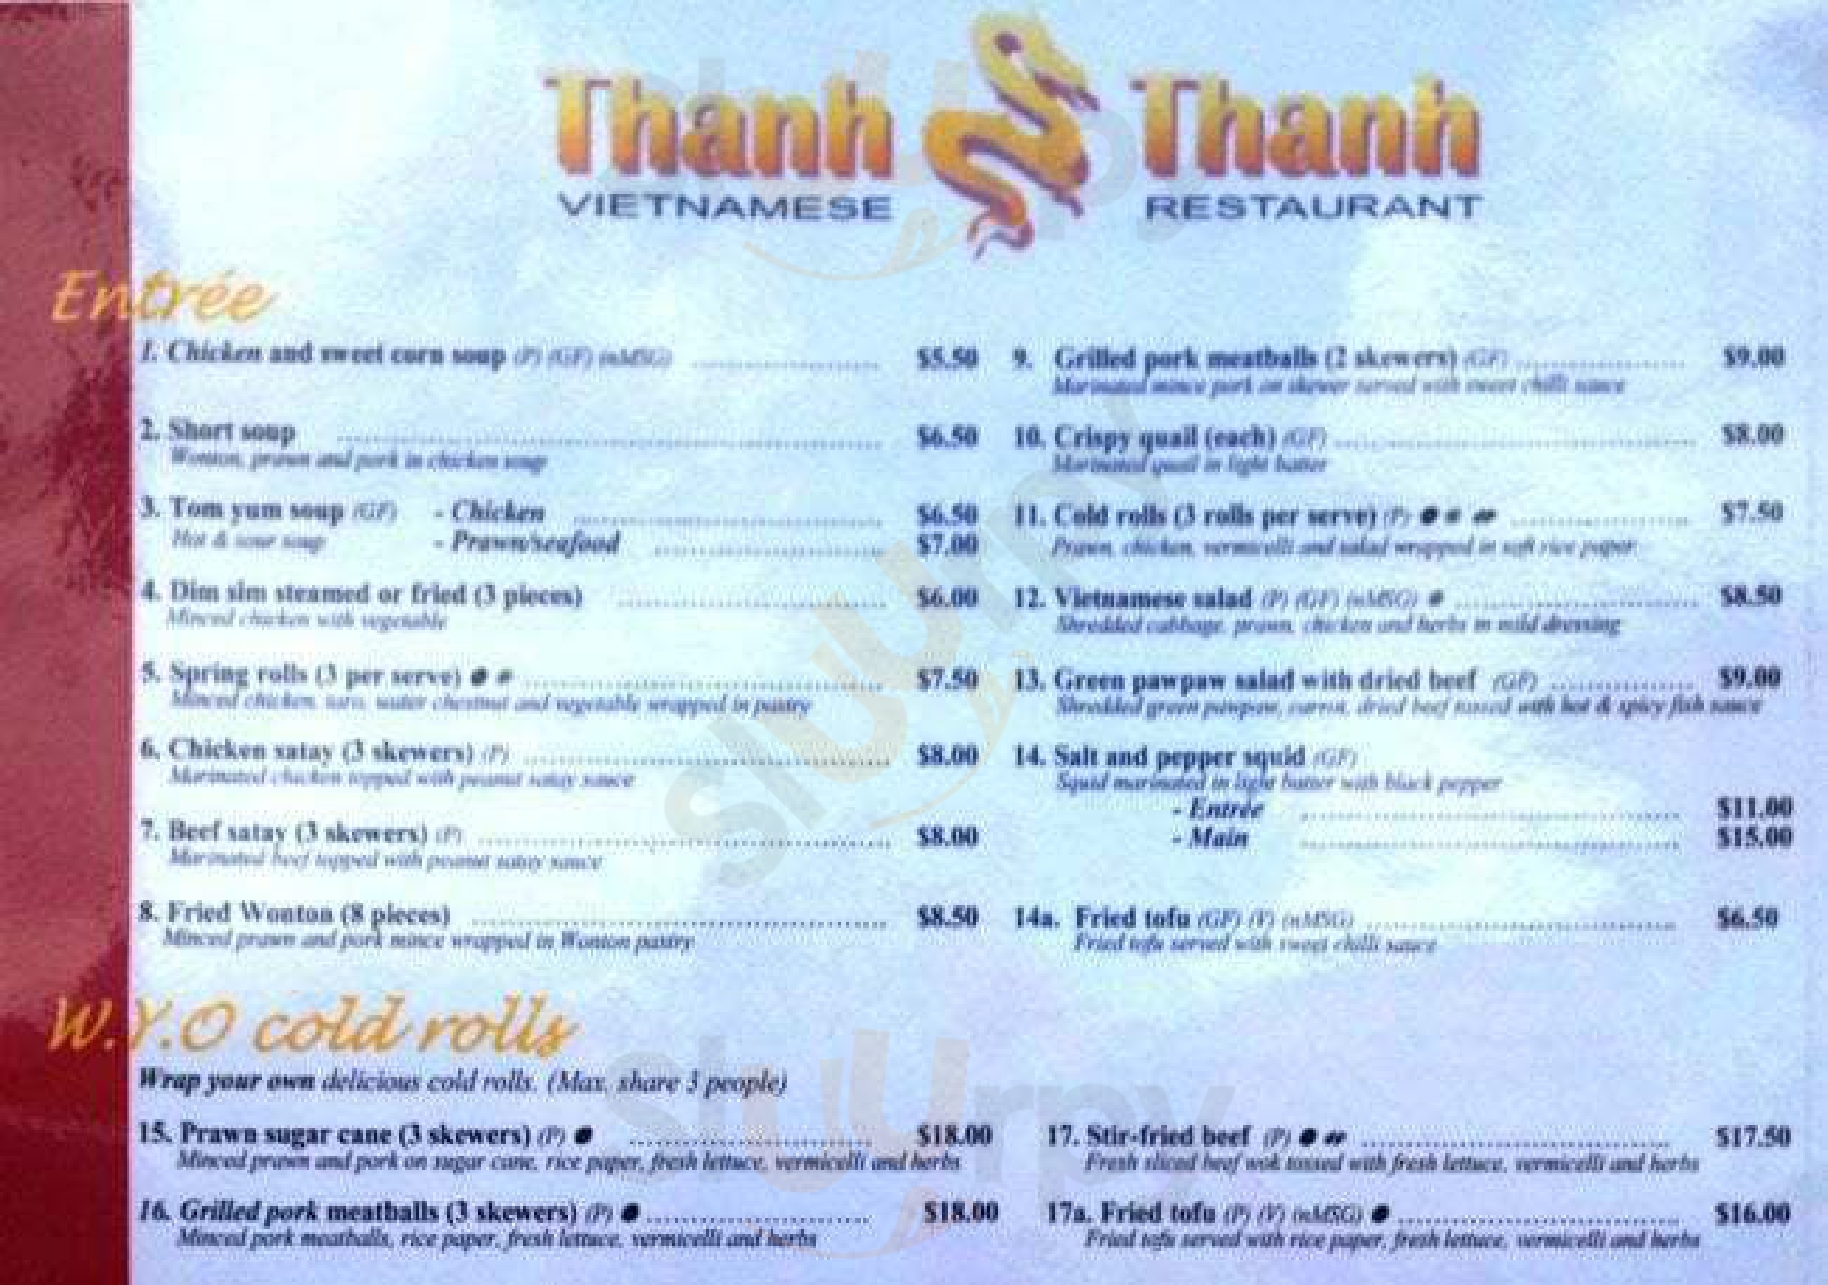 Thanh Thanh Vietnamese Restaurant Adelaide Menu - 1